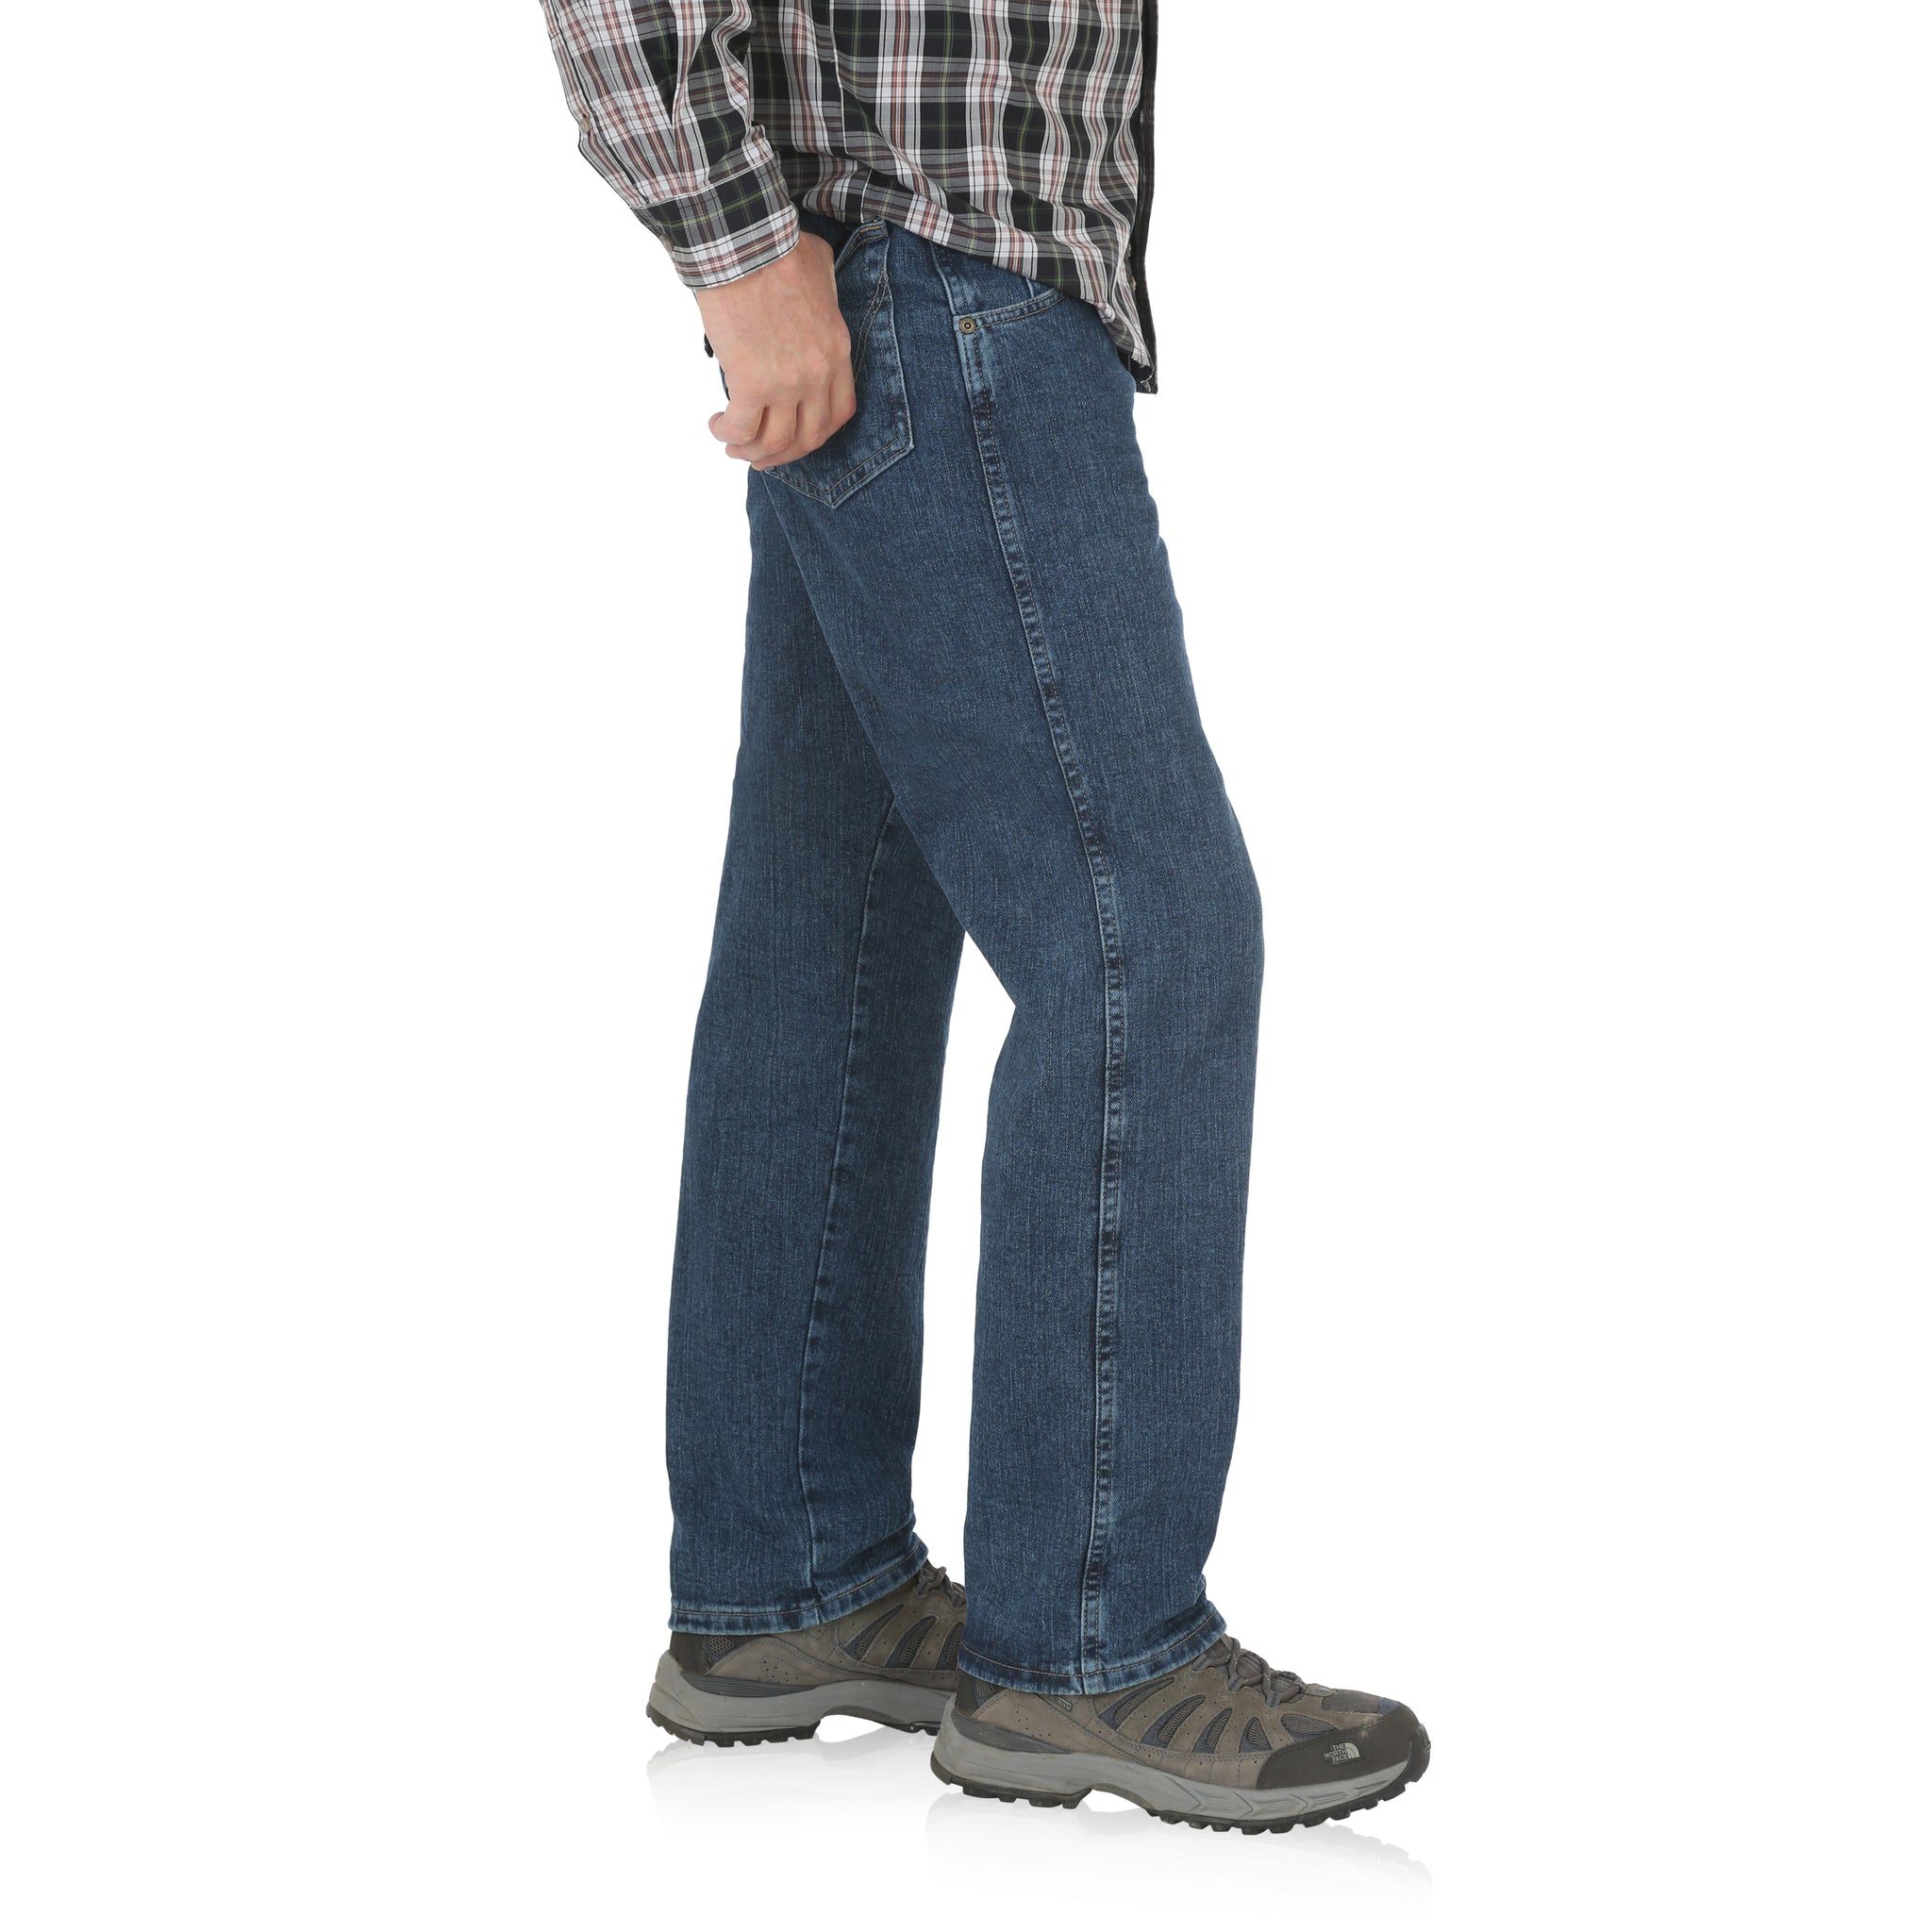 Wrangler Jeans Men's 33x30 Medium Wash Fleece Lined Relaxed Fit